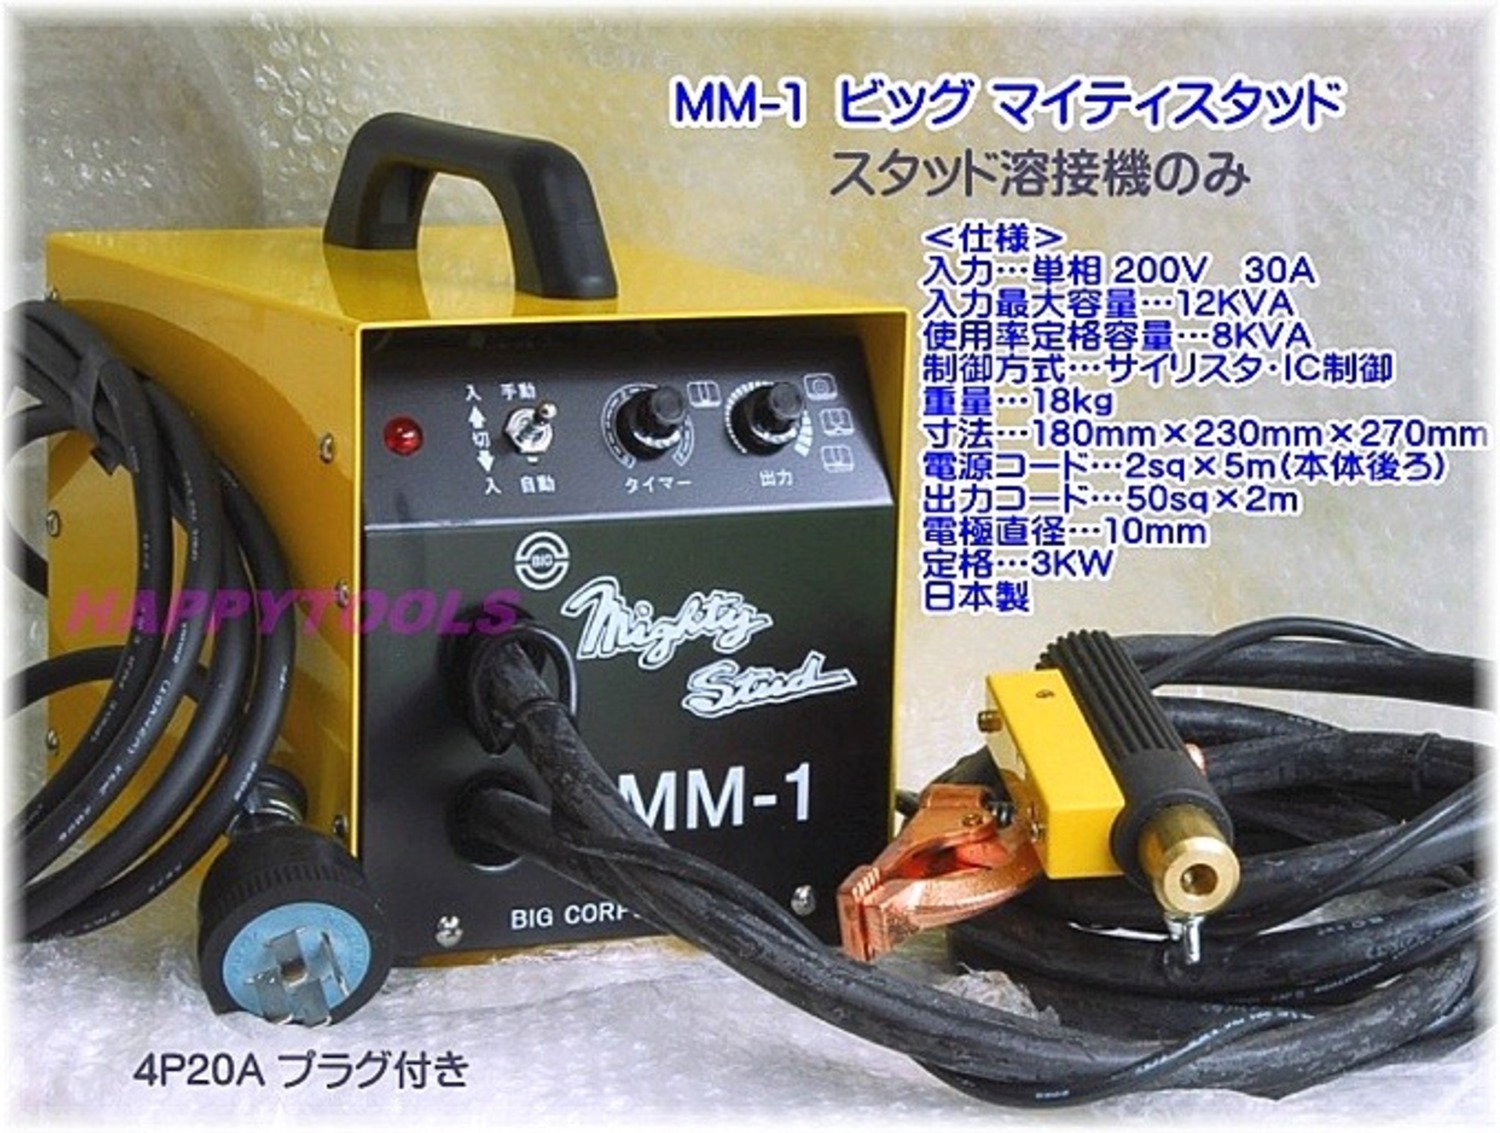 UKK マイティスタッド 溶接機 MM-1 - 工具、DIY用品